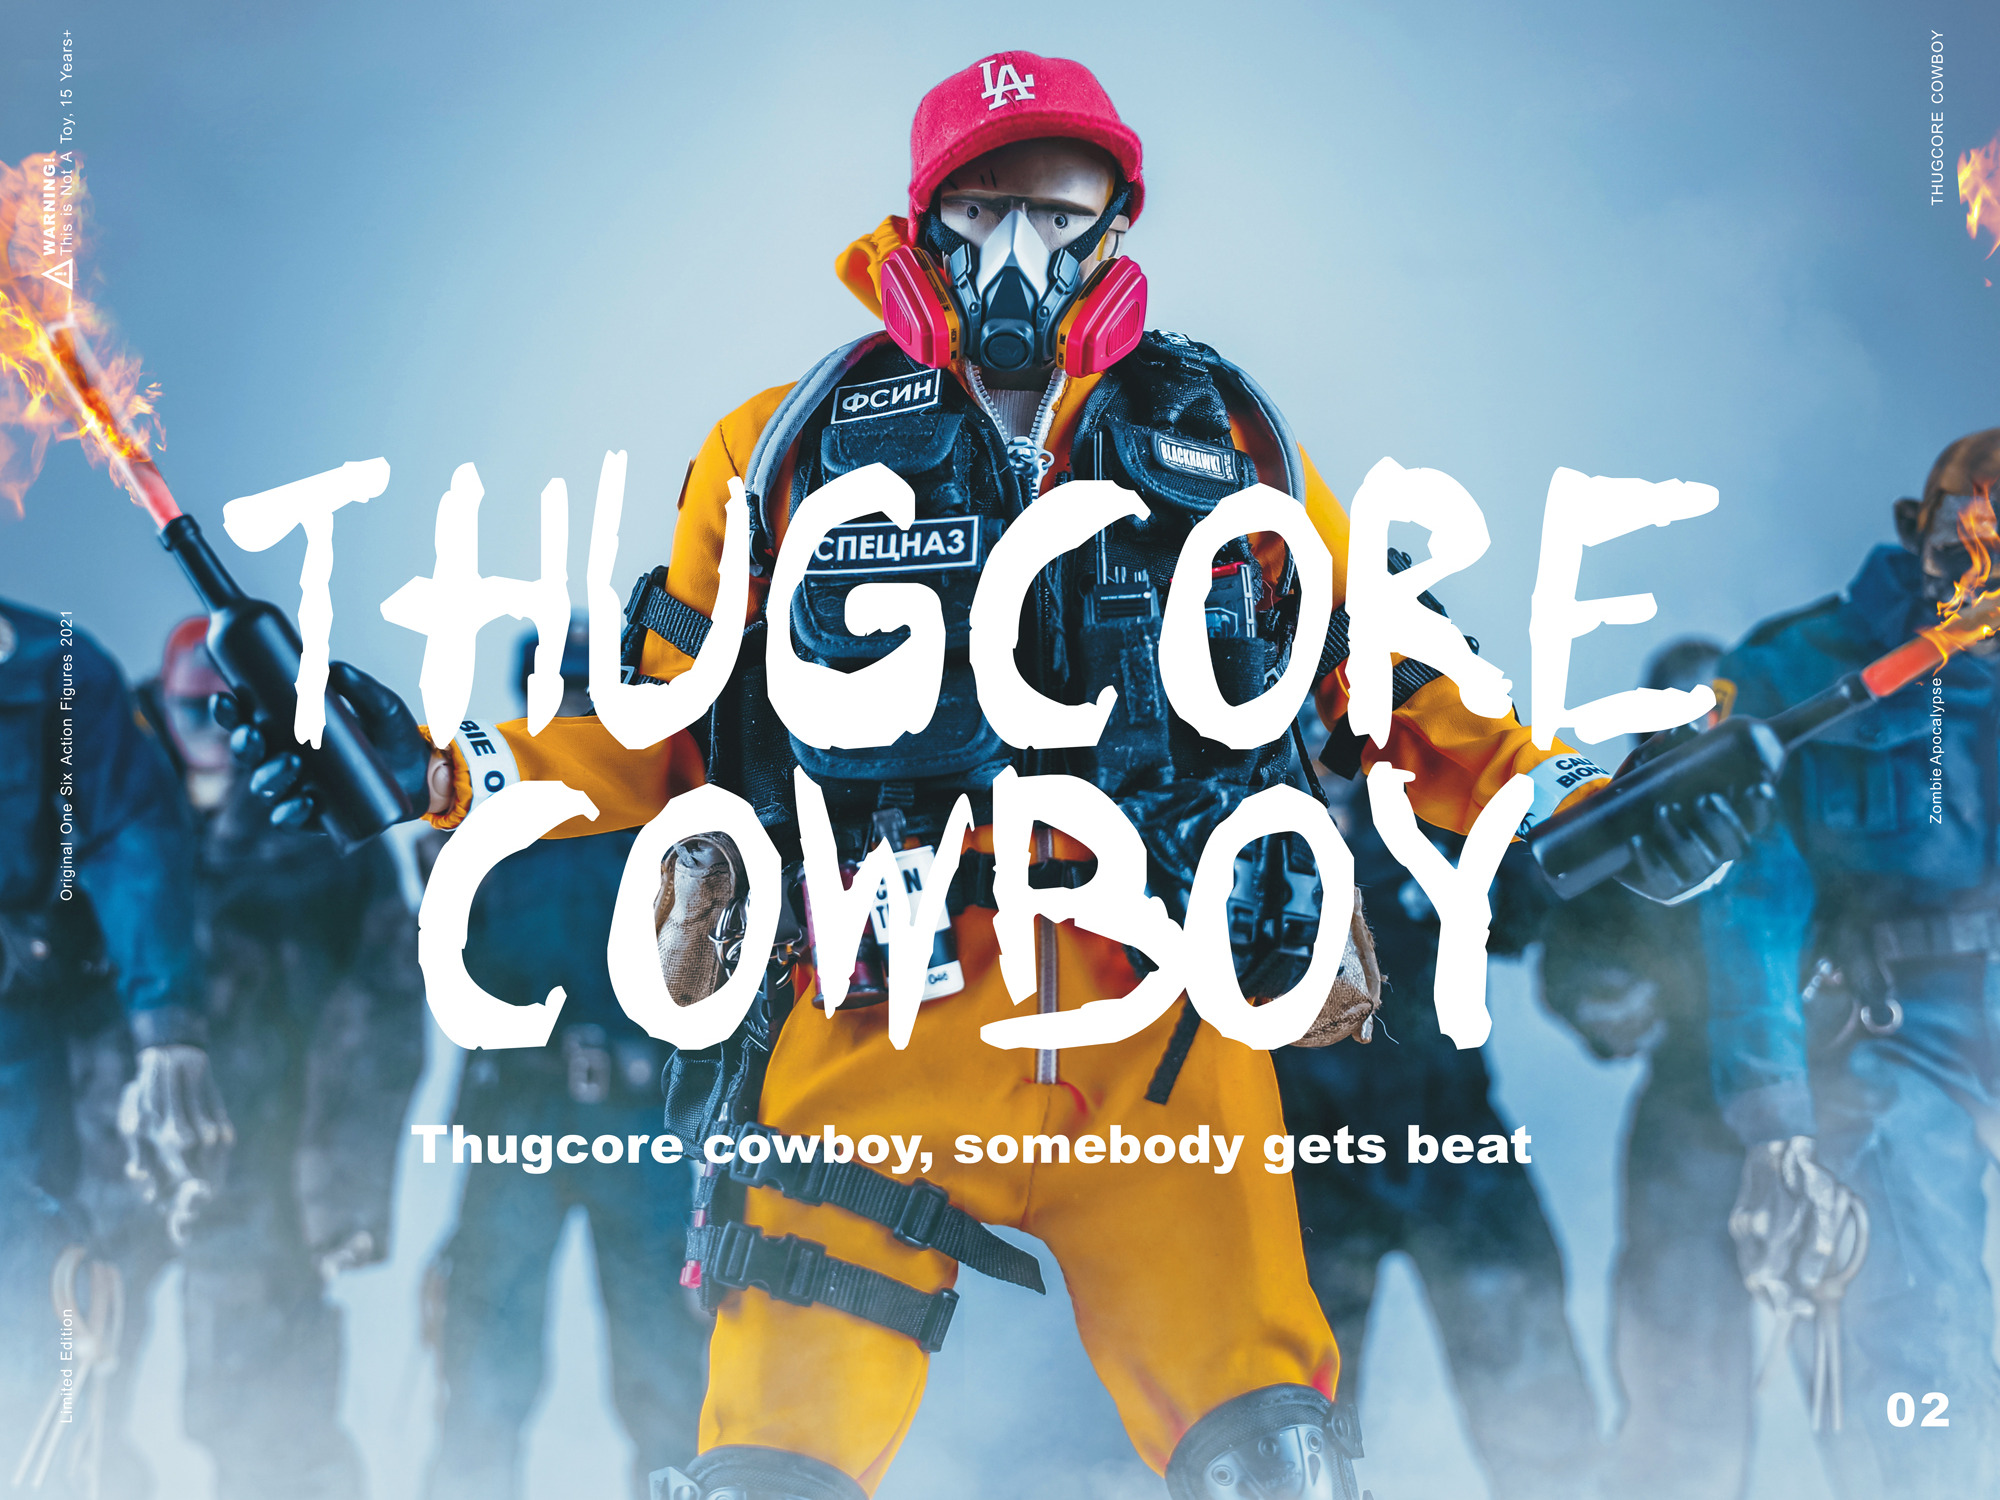 Thugcore Cowboy